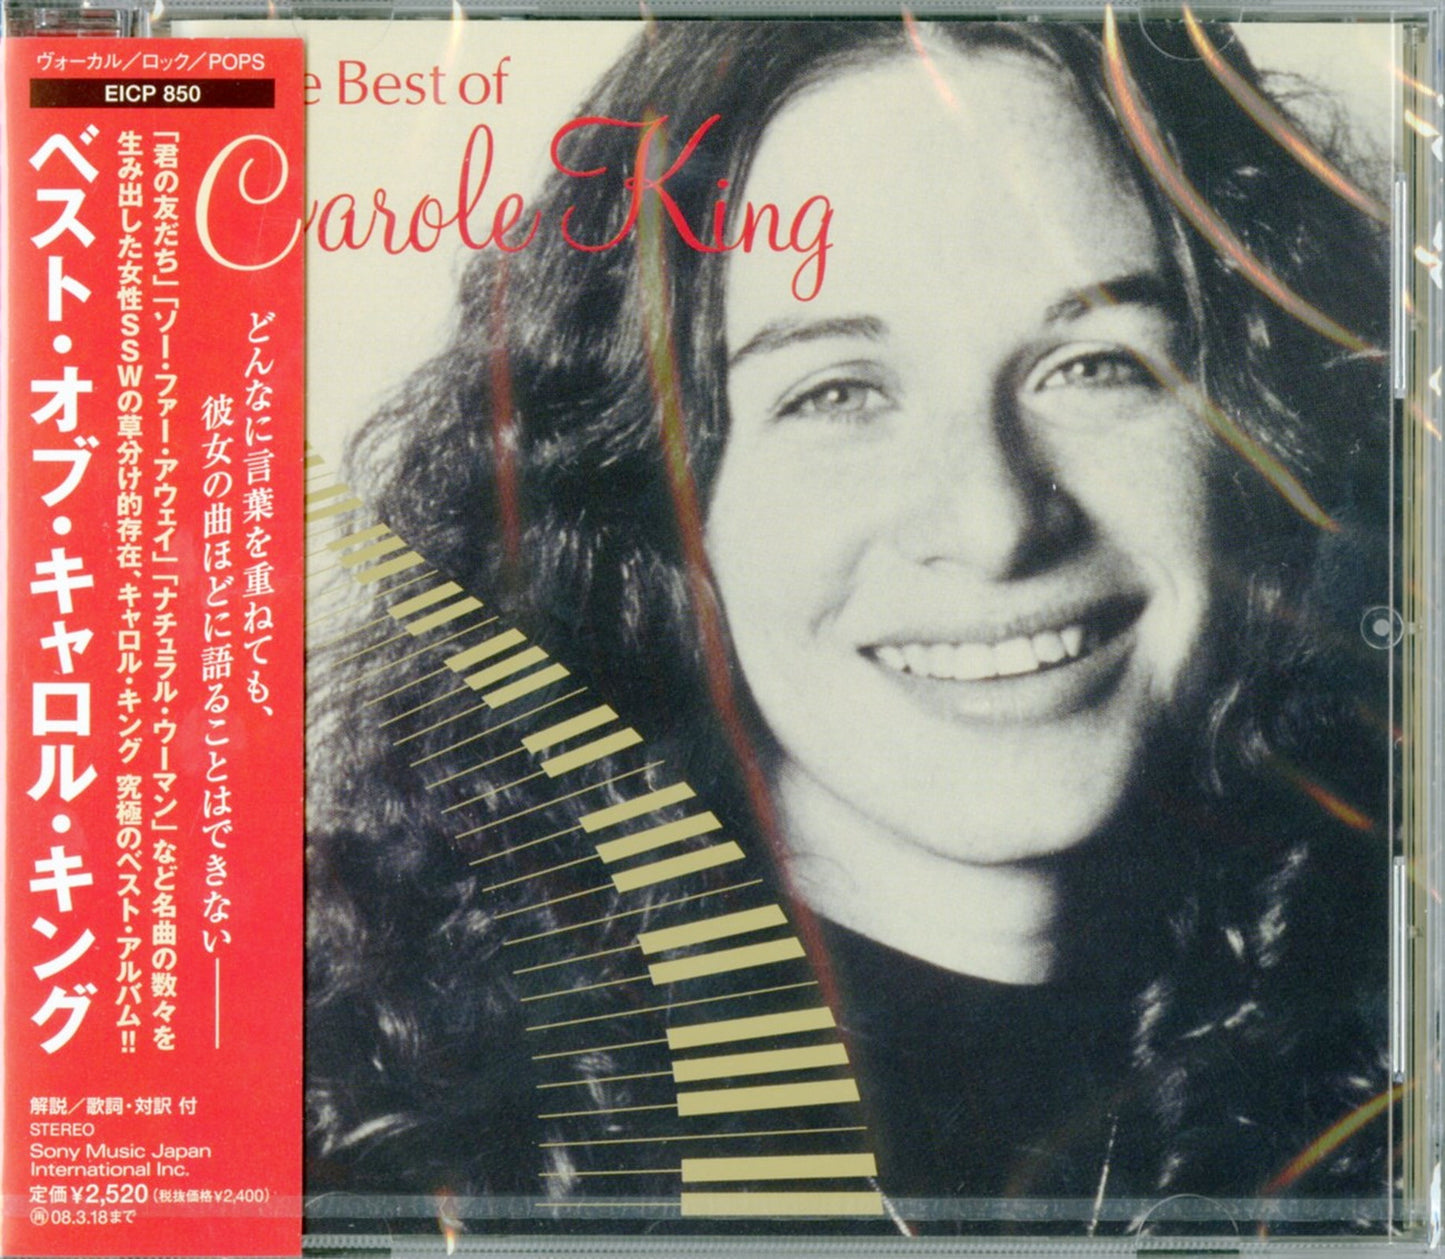 Carole King - The Best Of Carole King - Japan CD